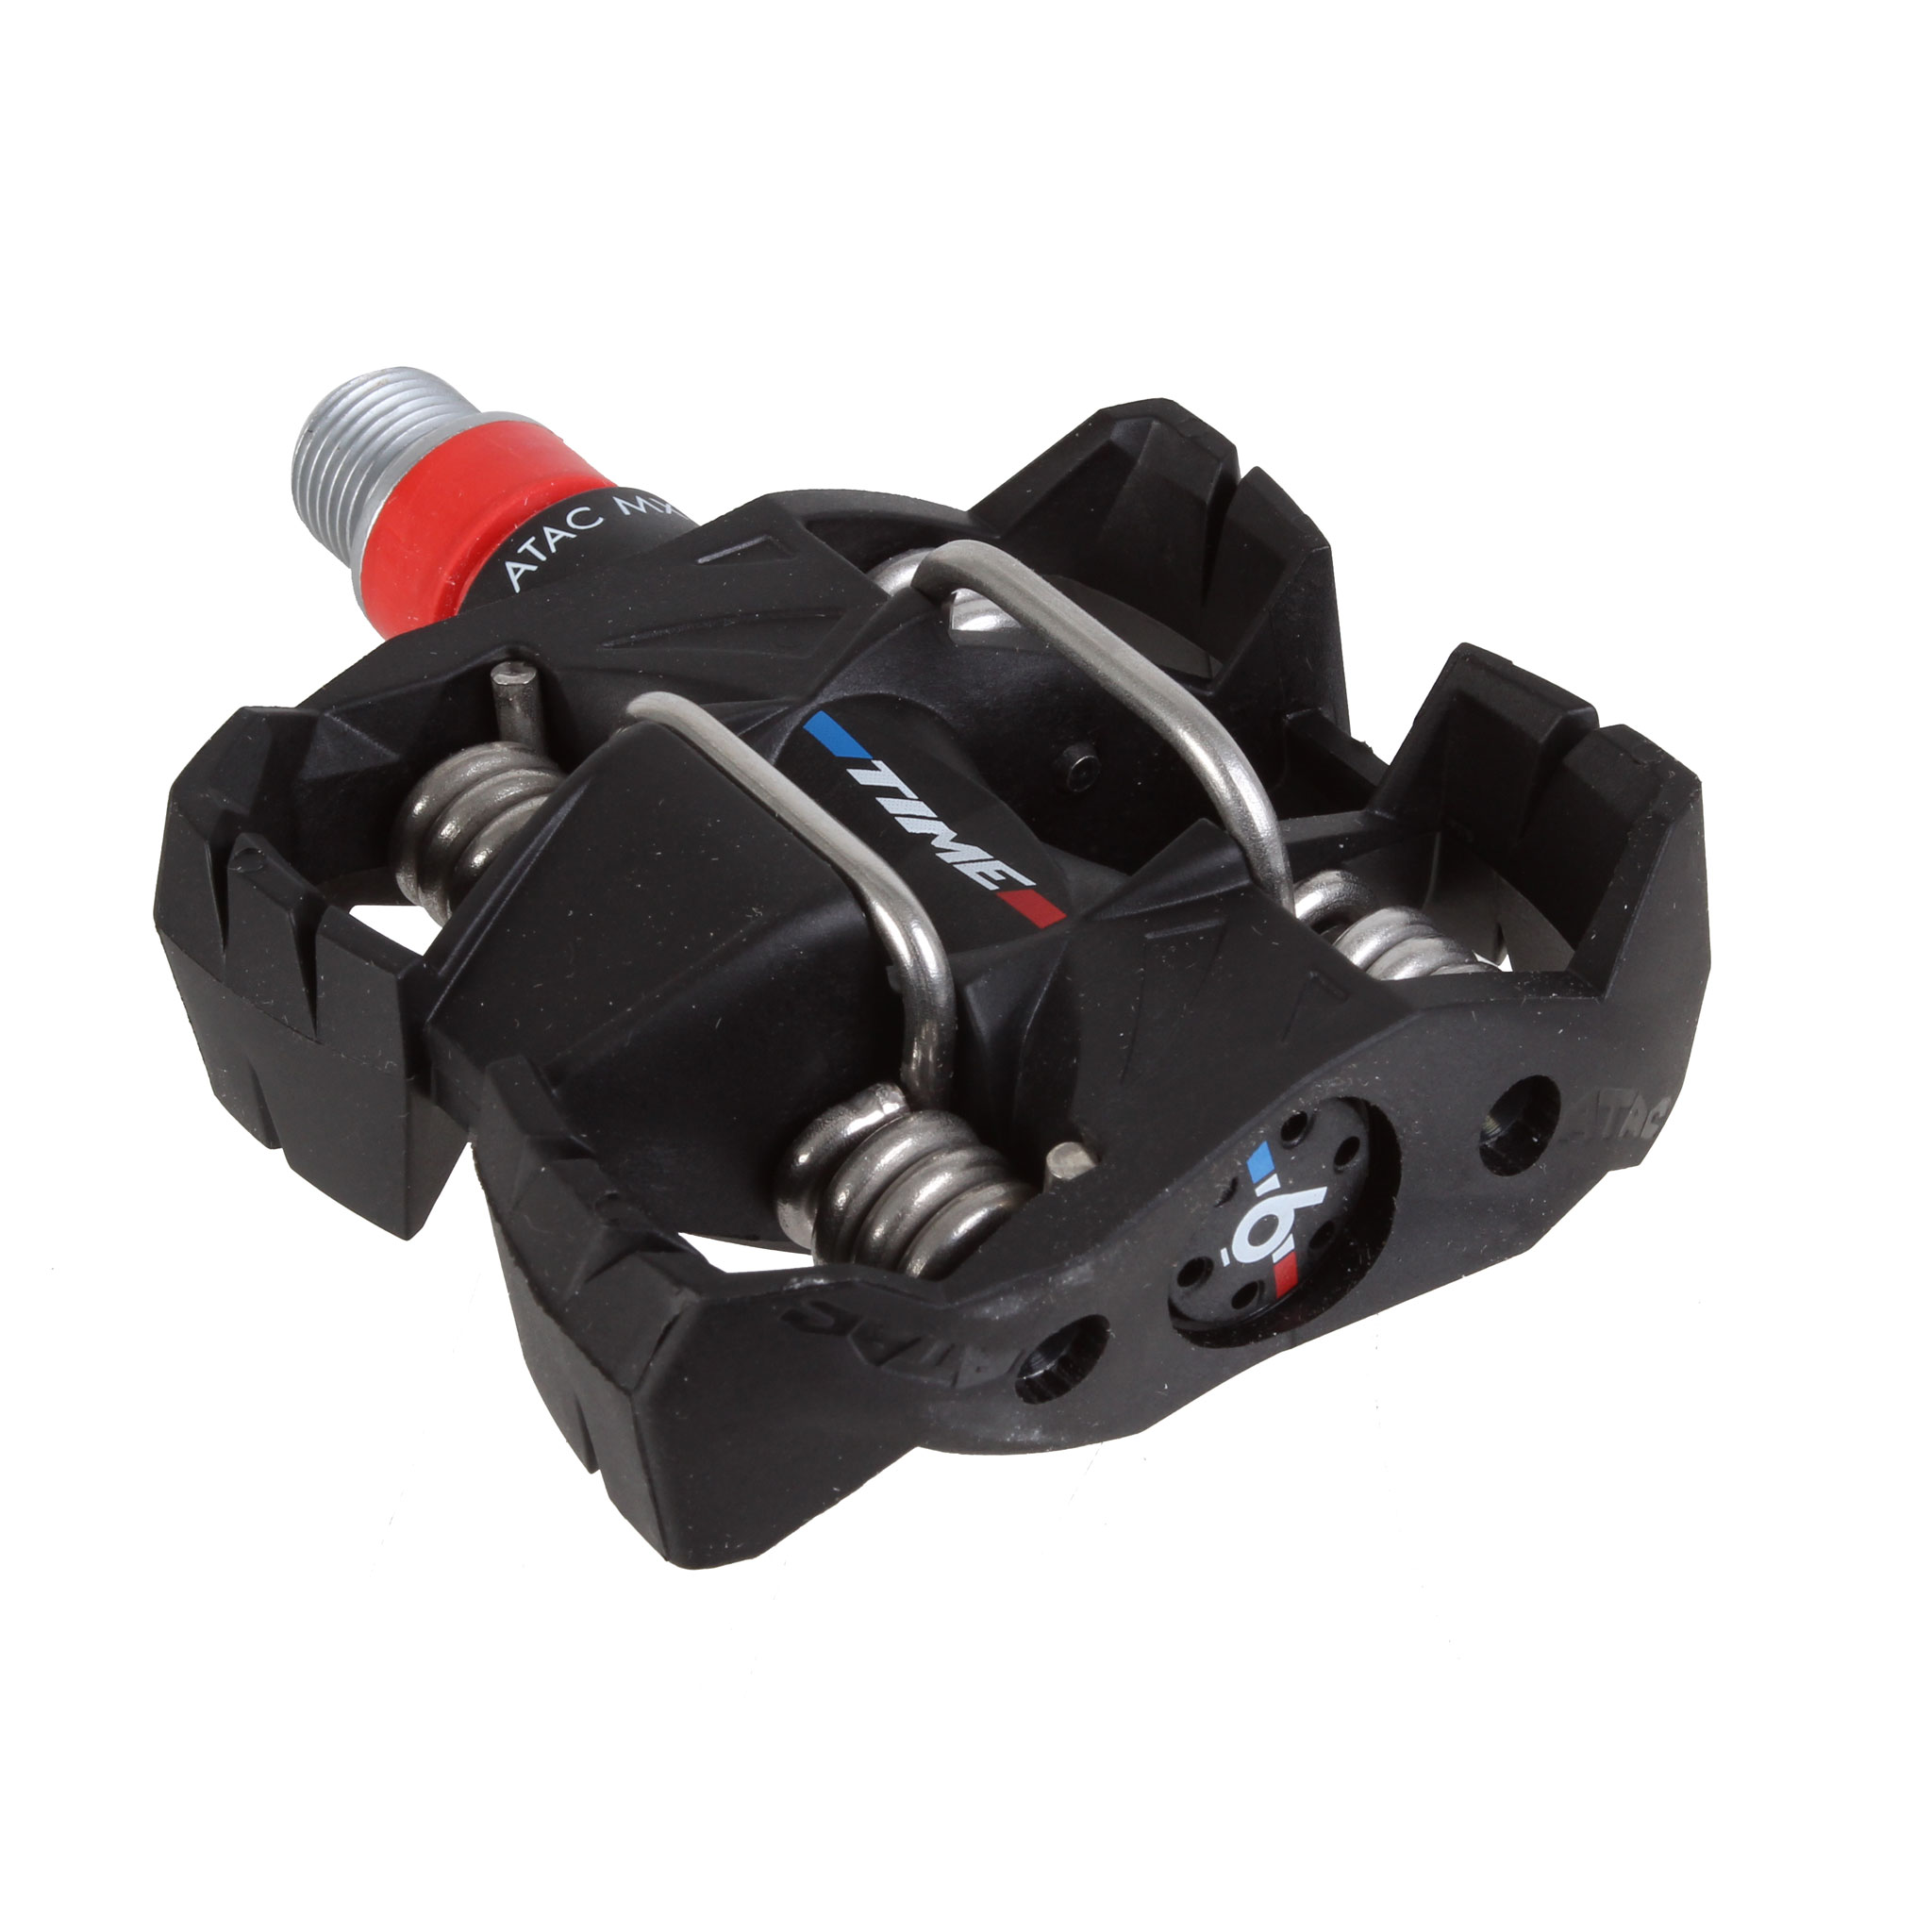 Time Sport MX 6 ATAC Pedals, Black | eBay